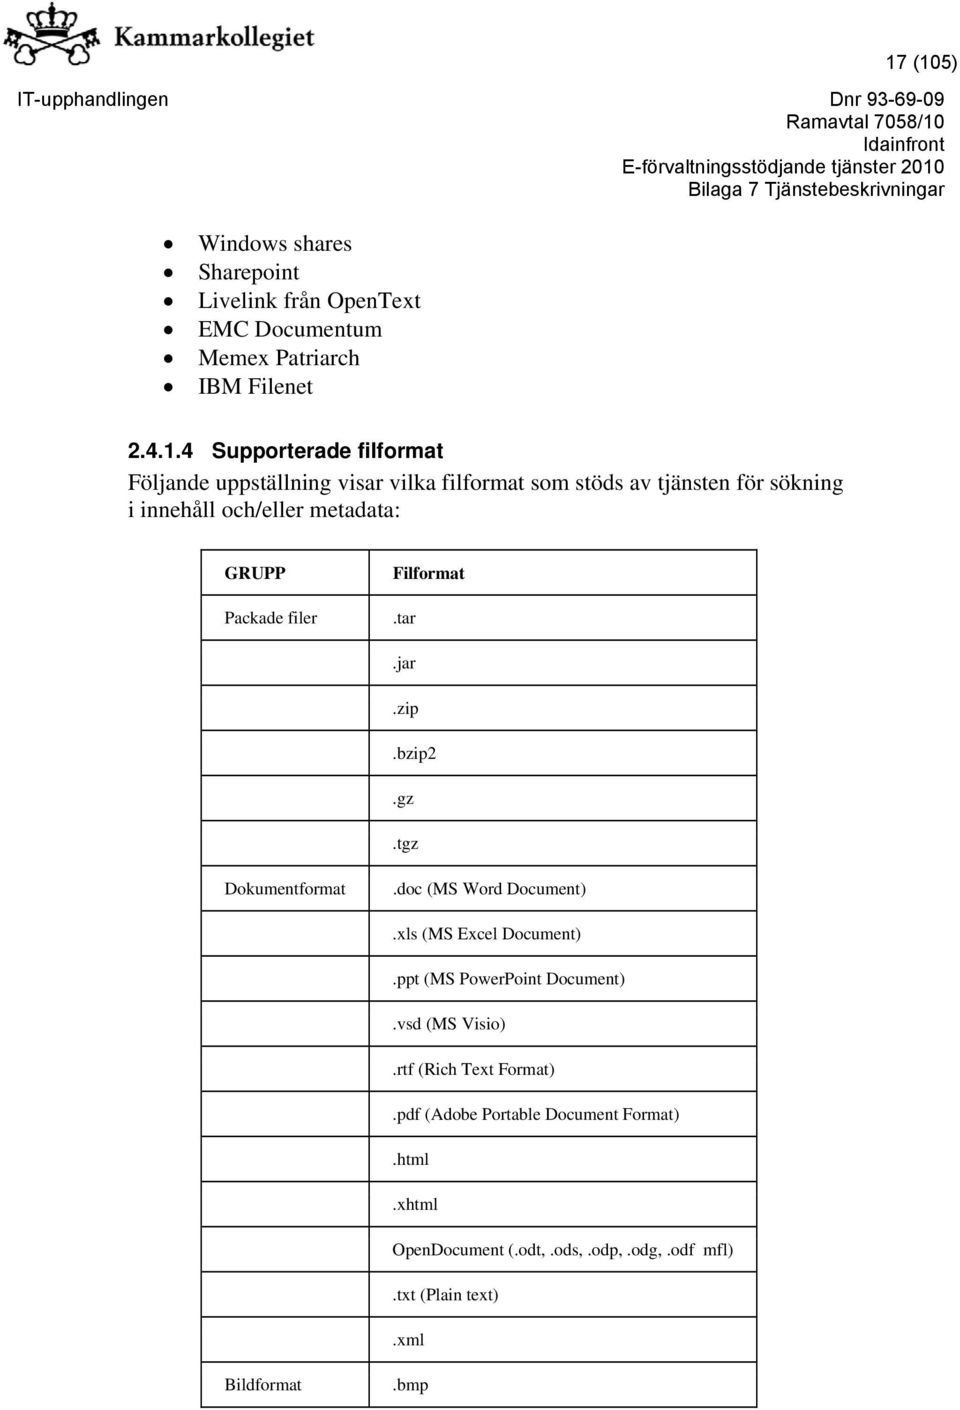 Filformat.tar.jar.zip.bzip2.gz.tgz Dokumentformat.doc (MS Word Document).xls (MS Excel Document).ppt (MS PowerPoint Document).